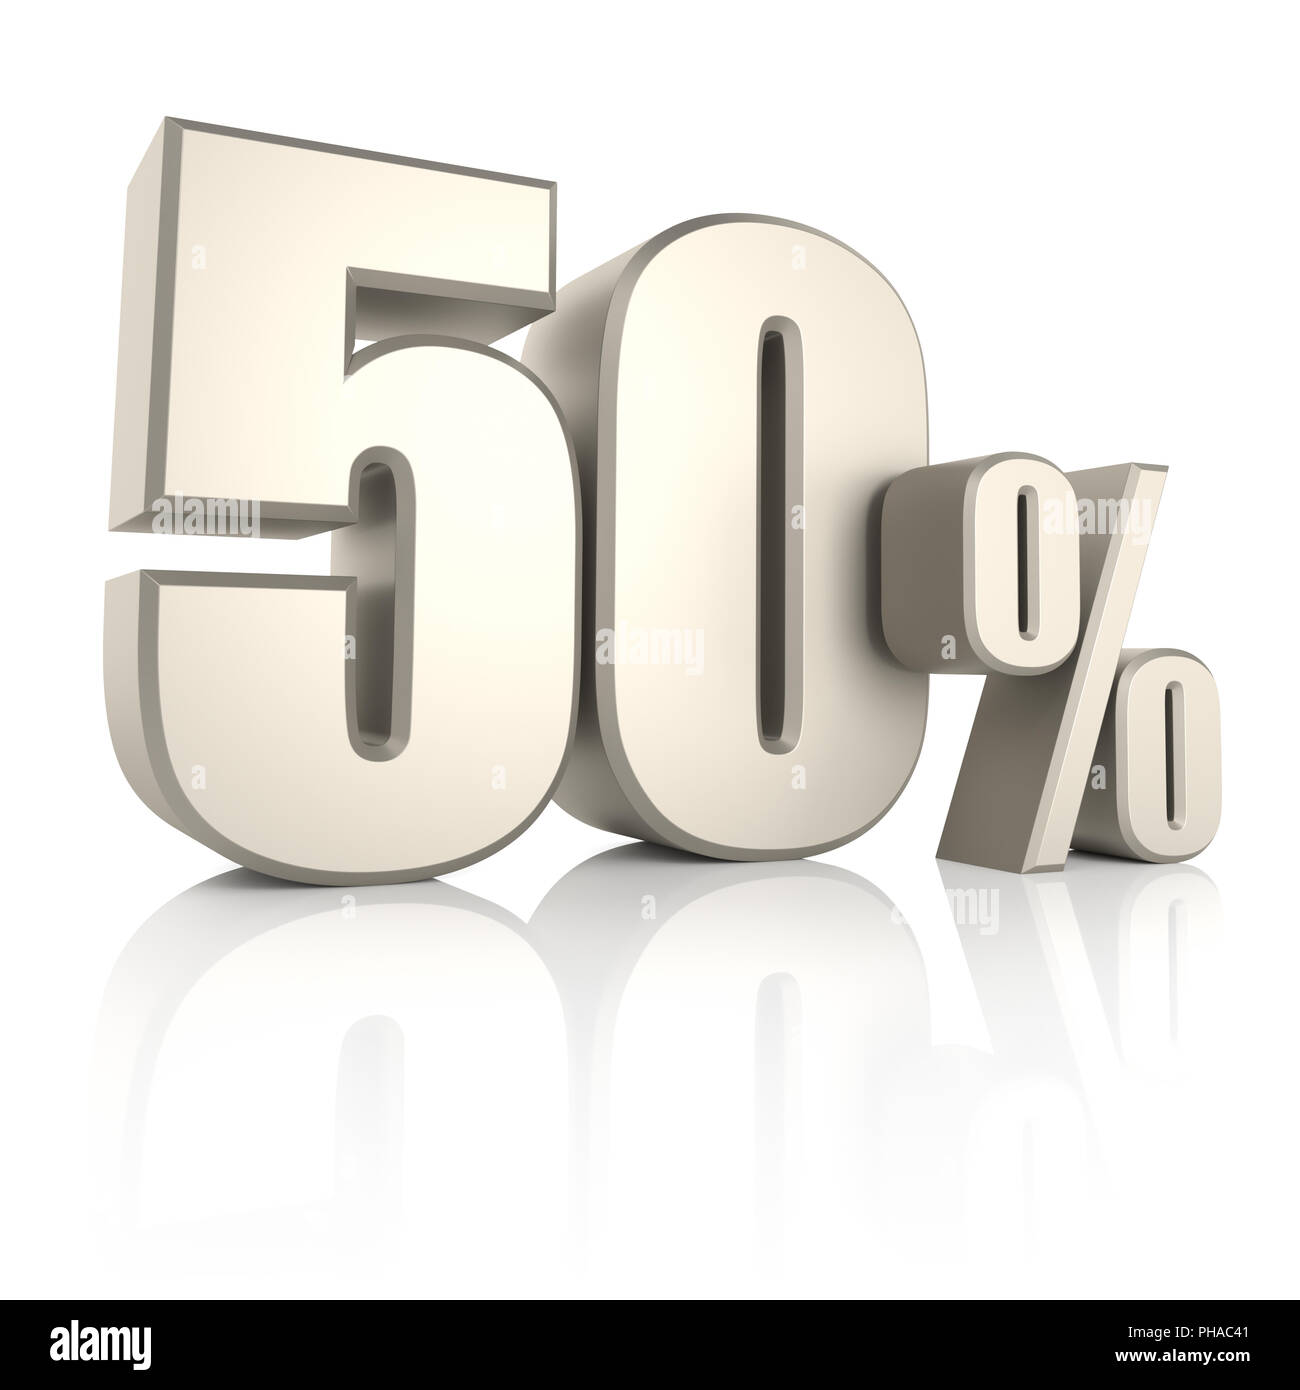 46,959 5% Discount Images, Stock Photos, 3D objects, & Vectors